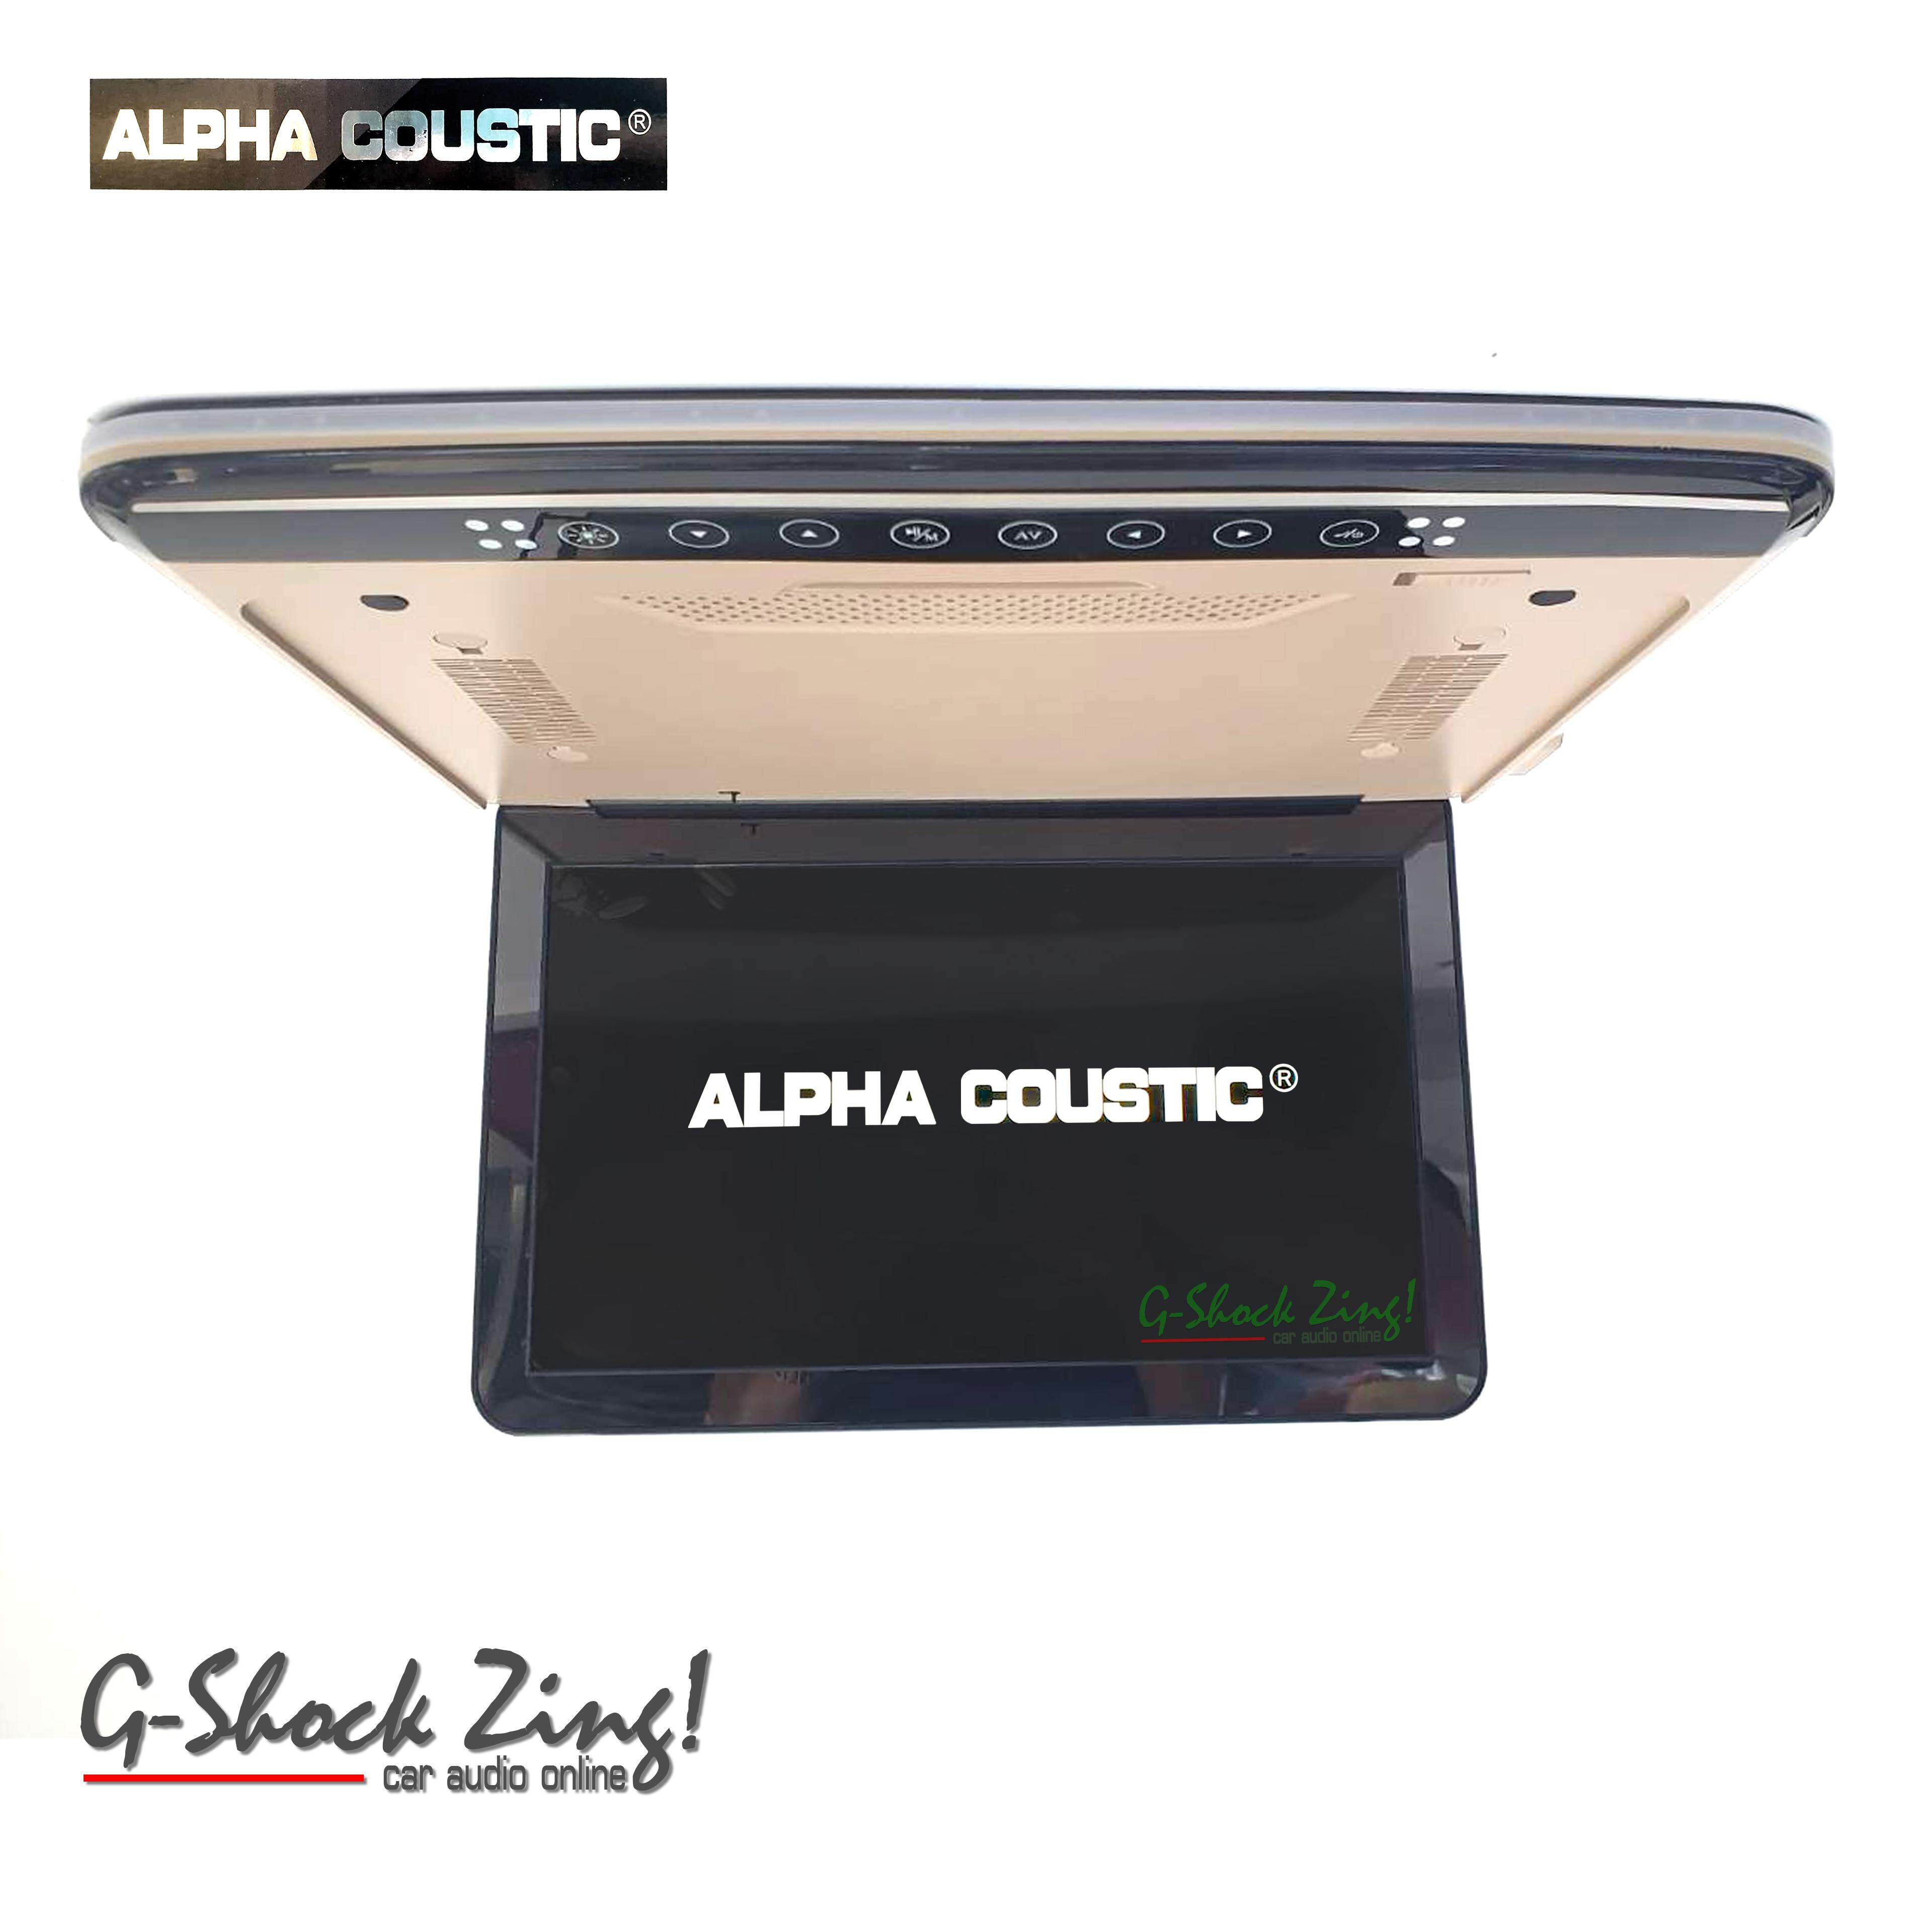 ALPHA COUSTIC Roofmount Monitor เครื่องเสียงรถยนต์ จอเพดานติดรถยนต์ ขนาดจอ 13.3นิ้ว HDMI IN /USB SLOT/SD SLOT (สี Beige)